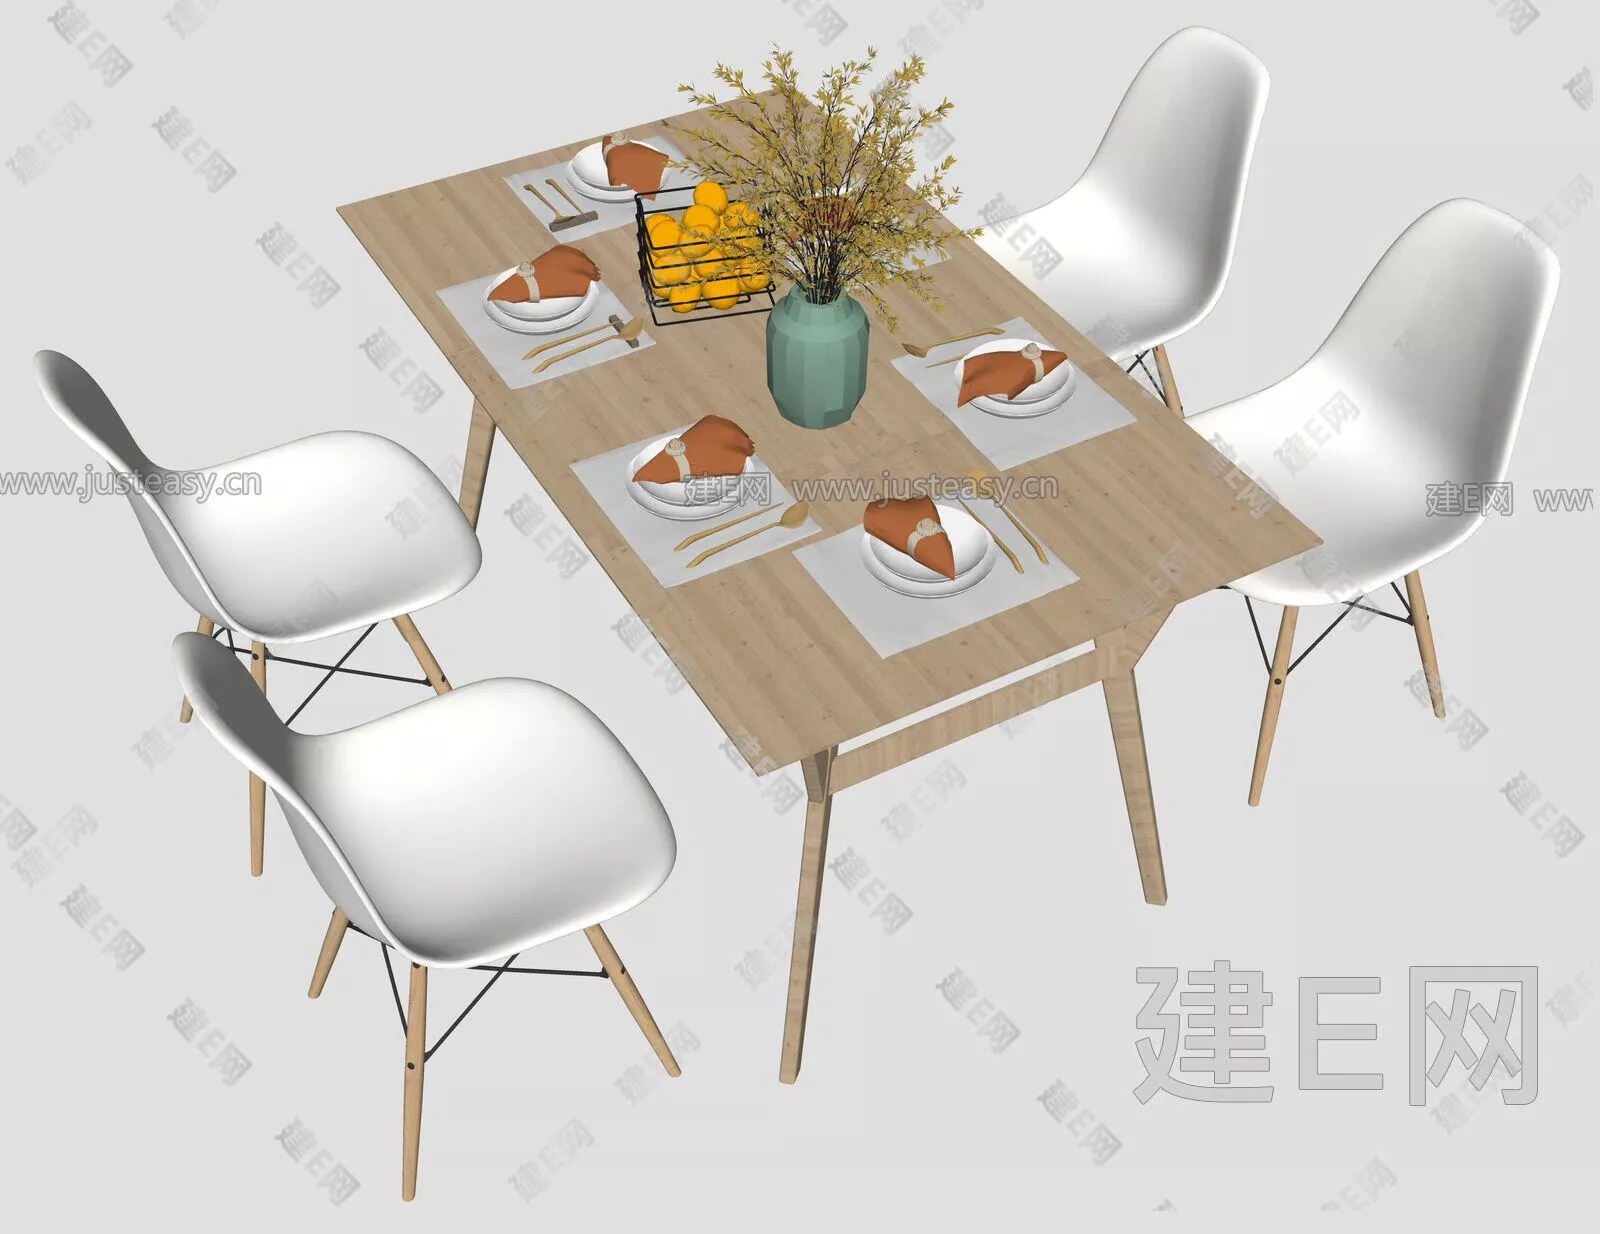 NORDIC DINING TABLE SET - SKETCHUP 3D MODEL - ENSCAPE - 111886702